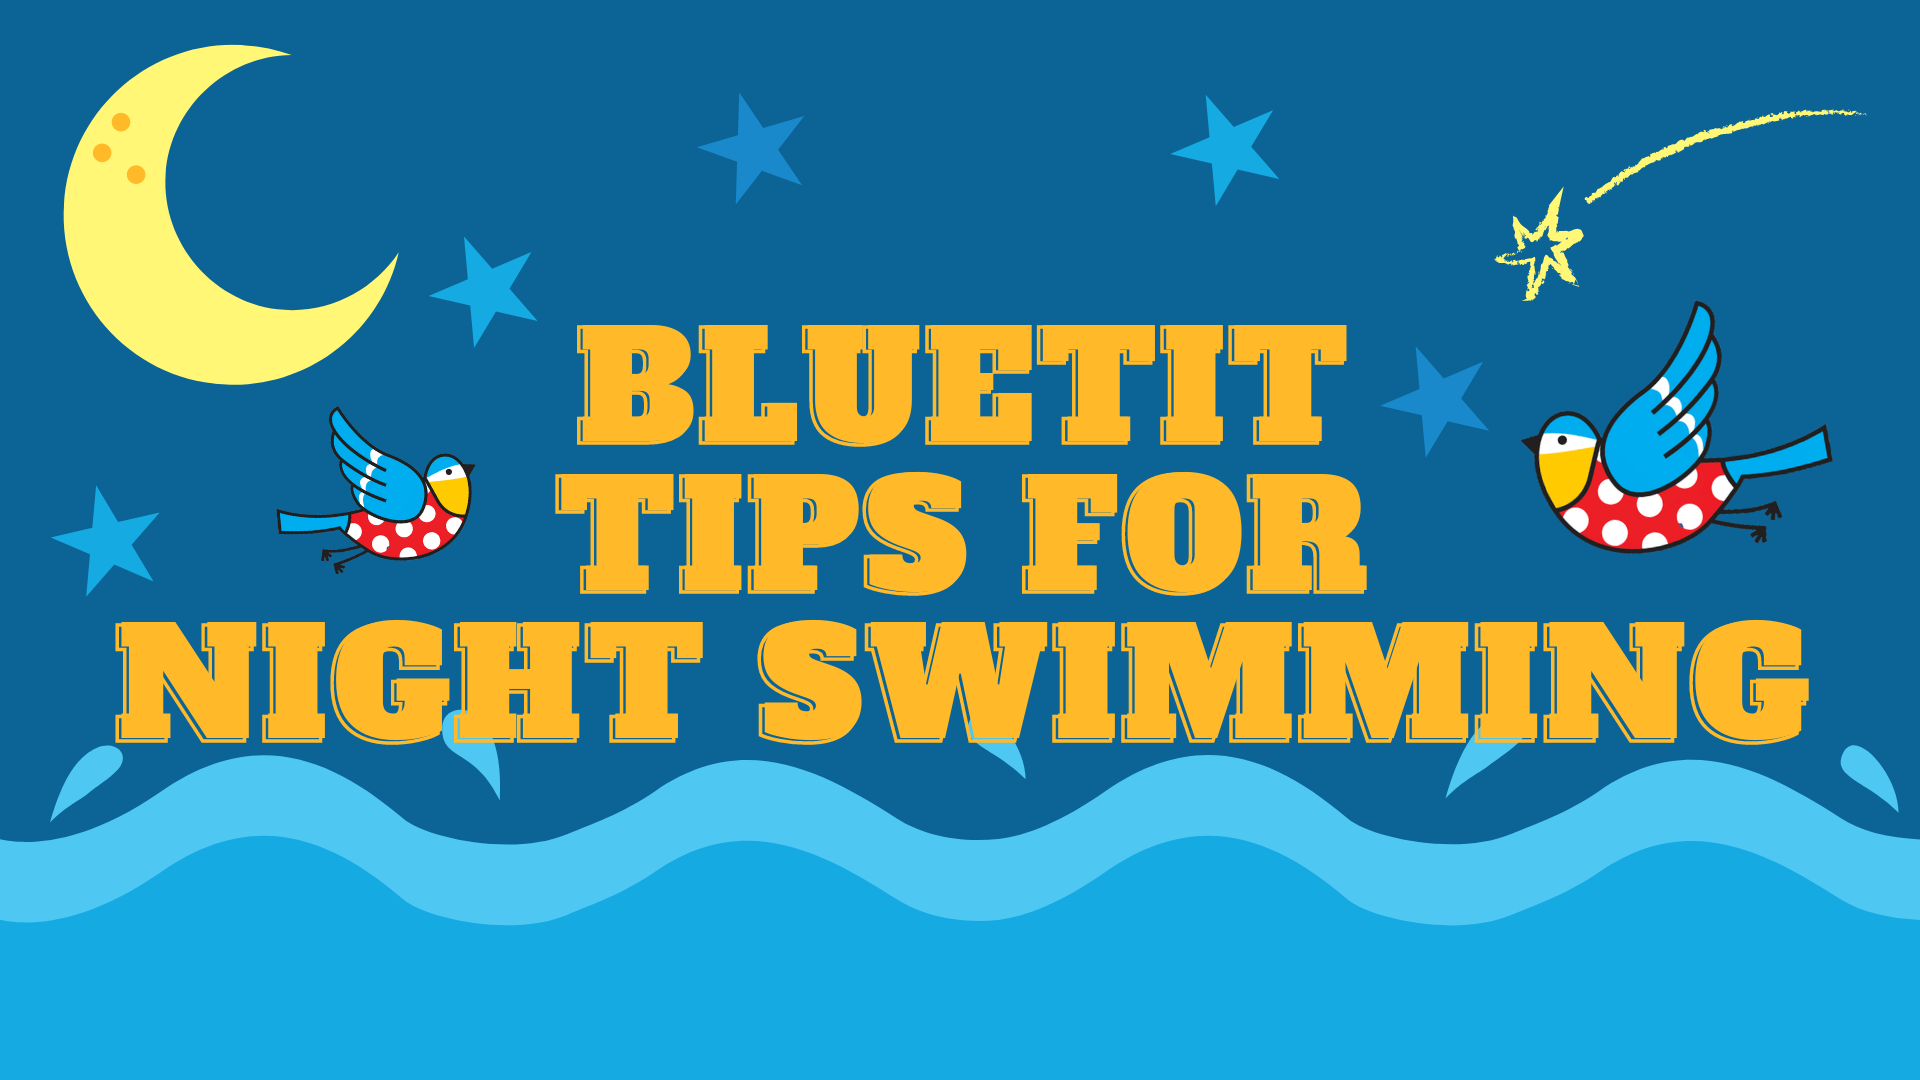 Bluetit Tips for Night Swimming